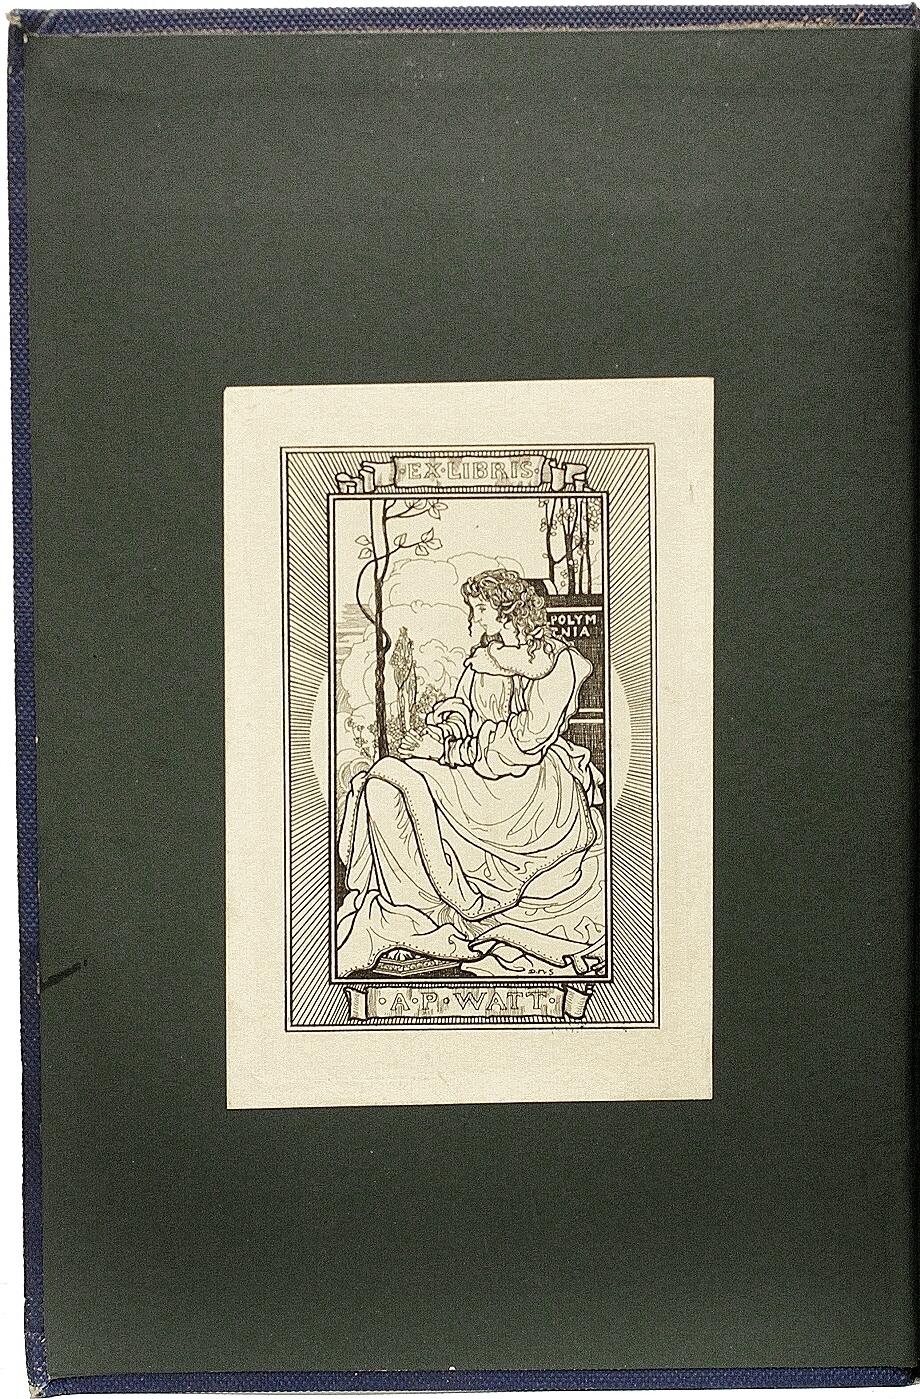 Fabric Rudyard KIPLING. Life's Handicap. 1891 - FIRST EDITION - PRESENTATION COPY ! For Sale